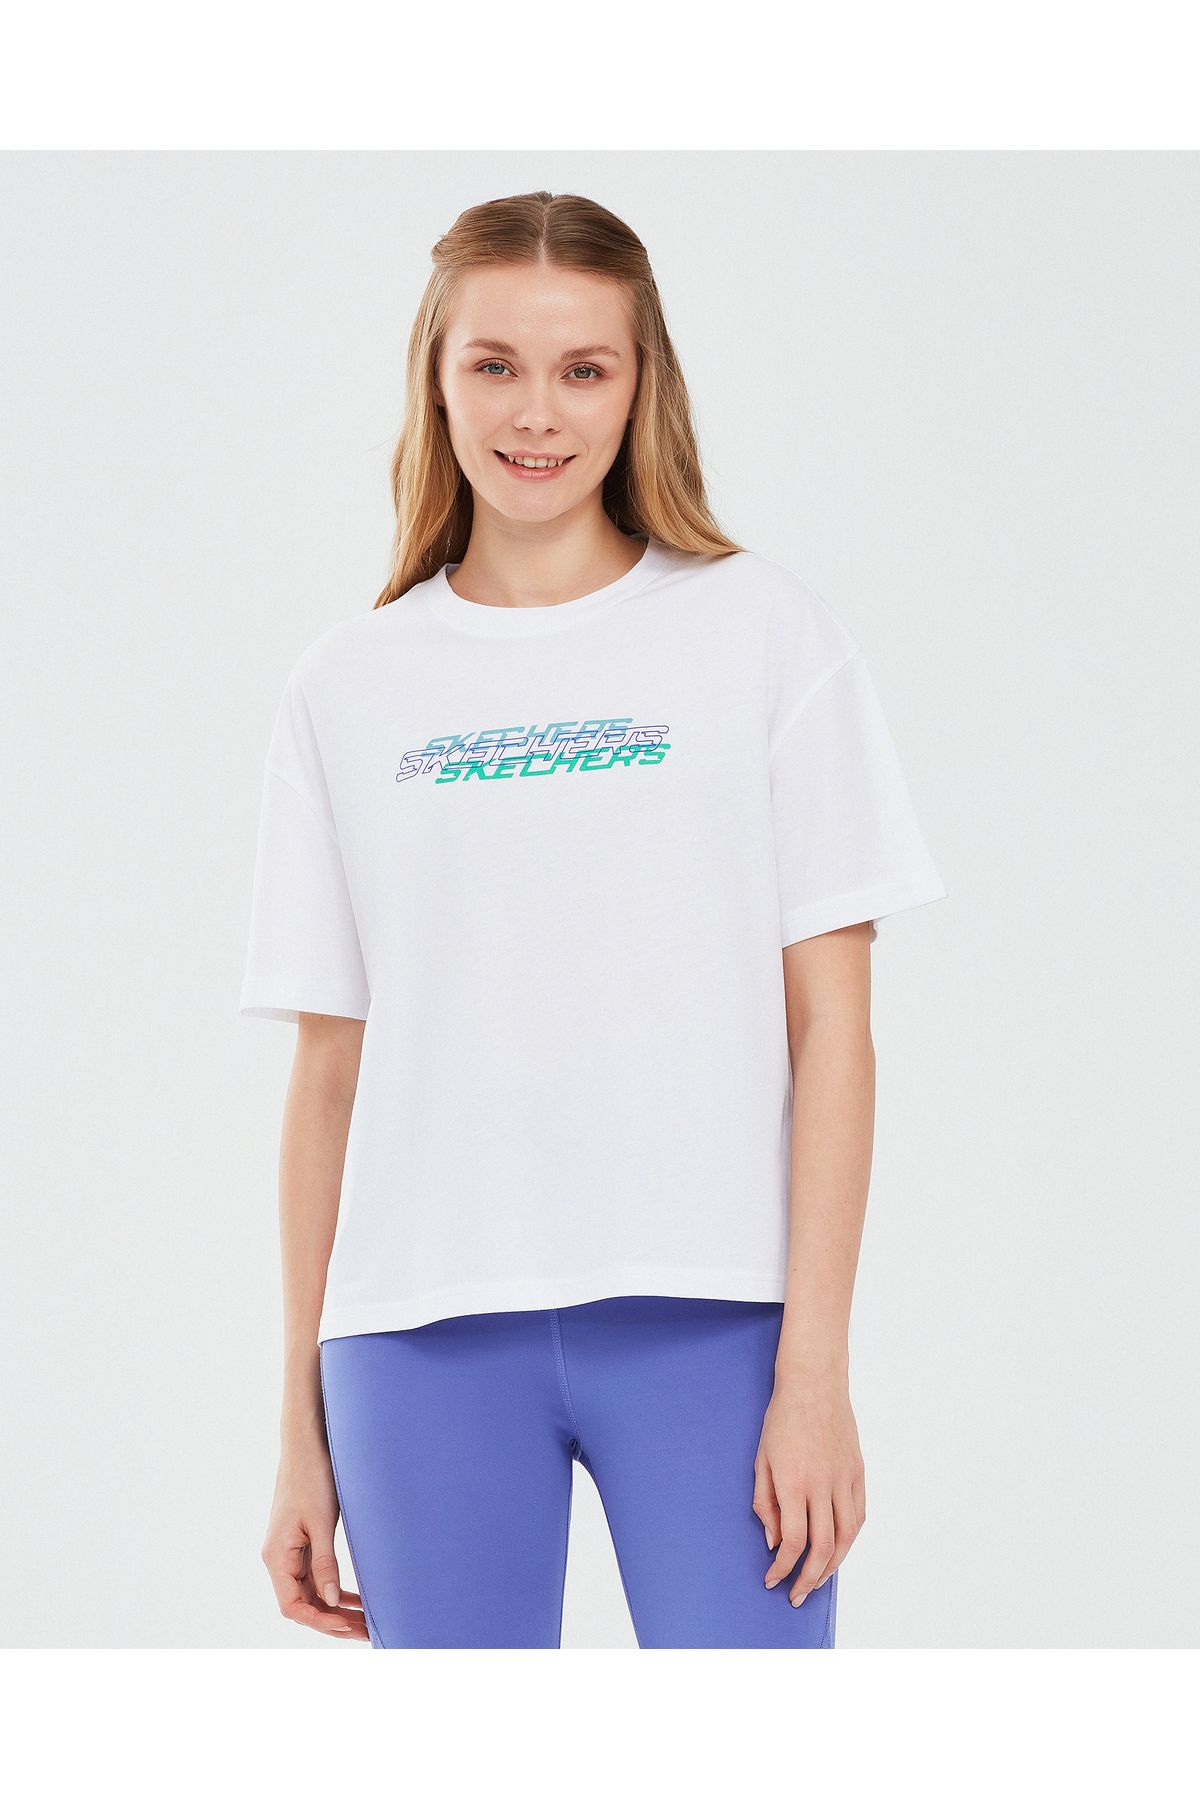 Skechers Graphic T-shirt W Short Sleeve Kadın Beyaz Tshirt S241199-100